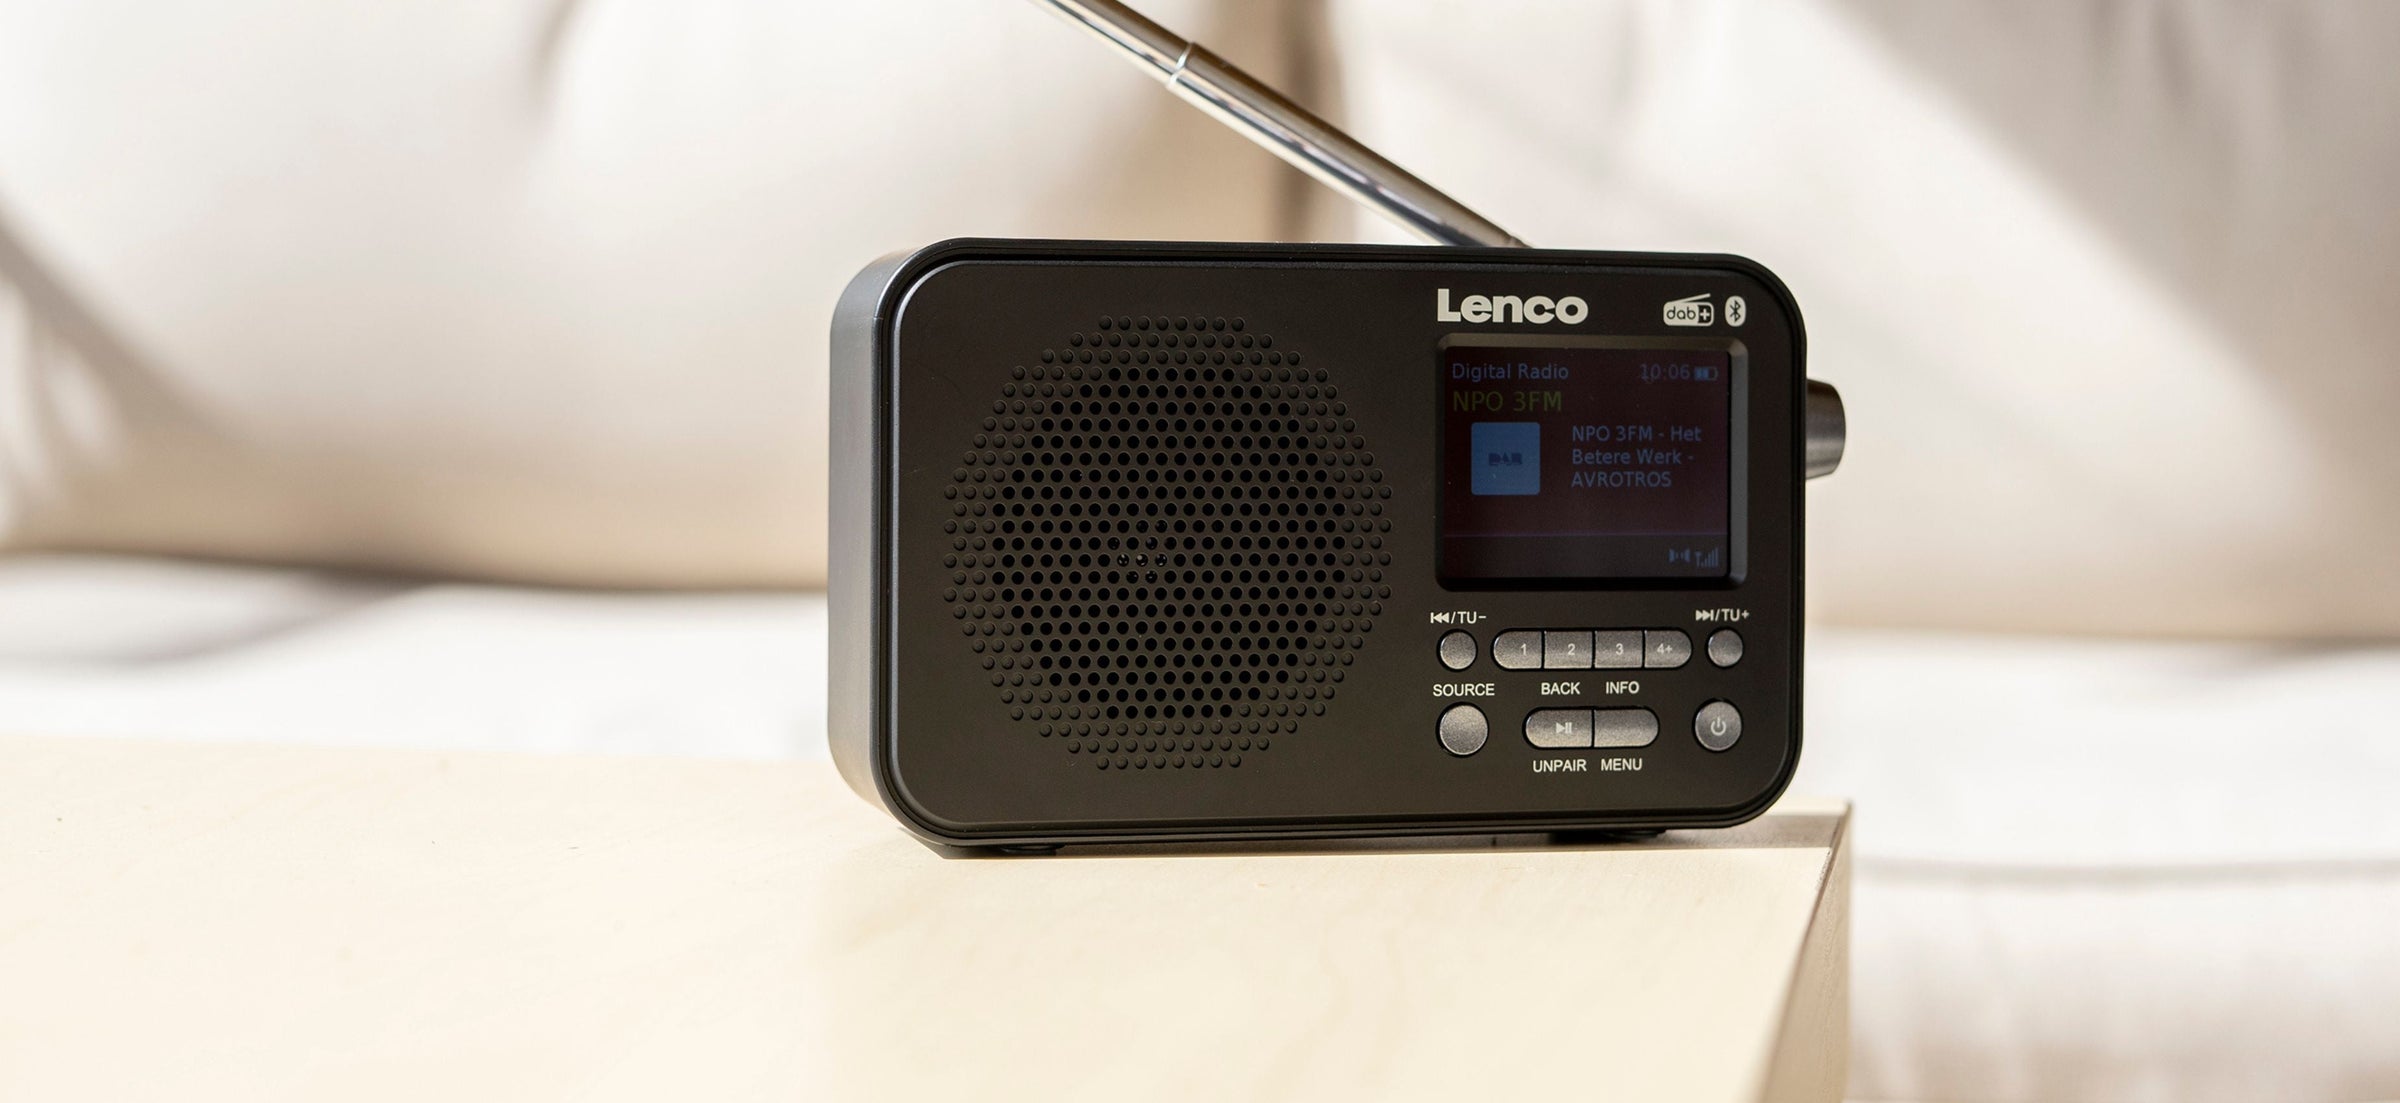 Lenco Bluetooth radios | Now in the Official Lenco Shop